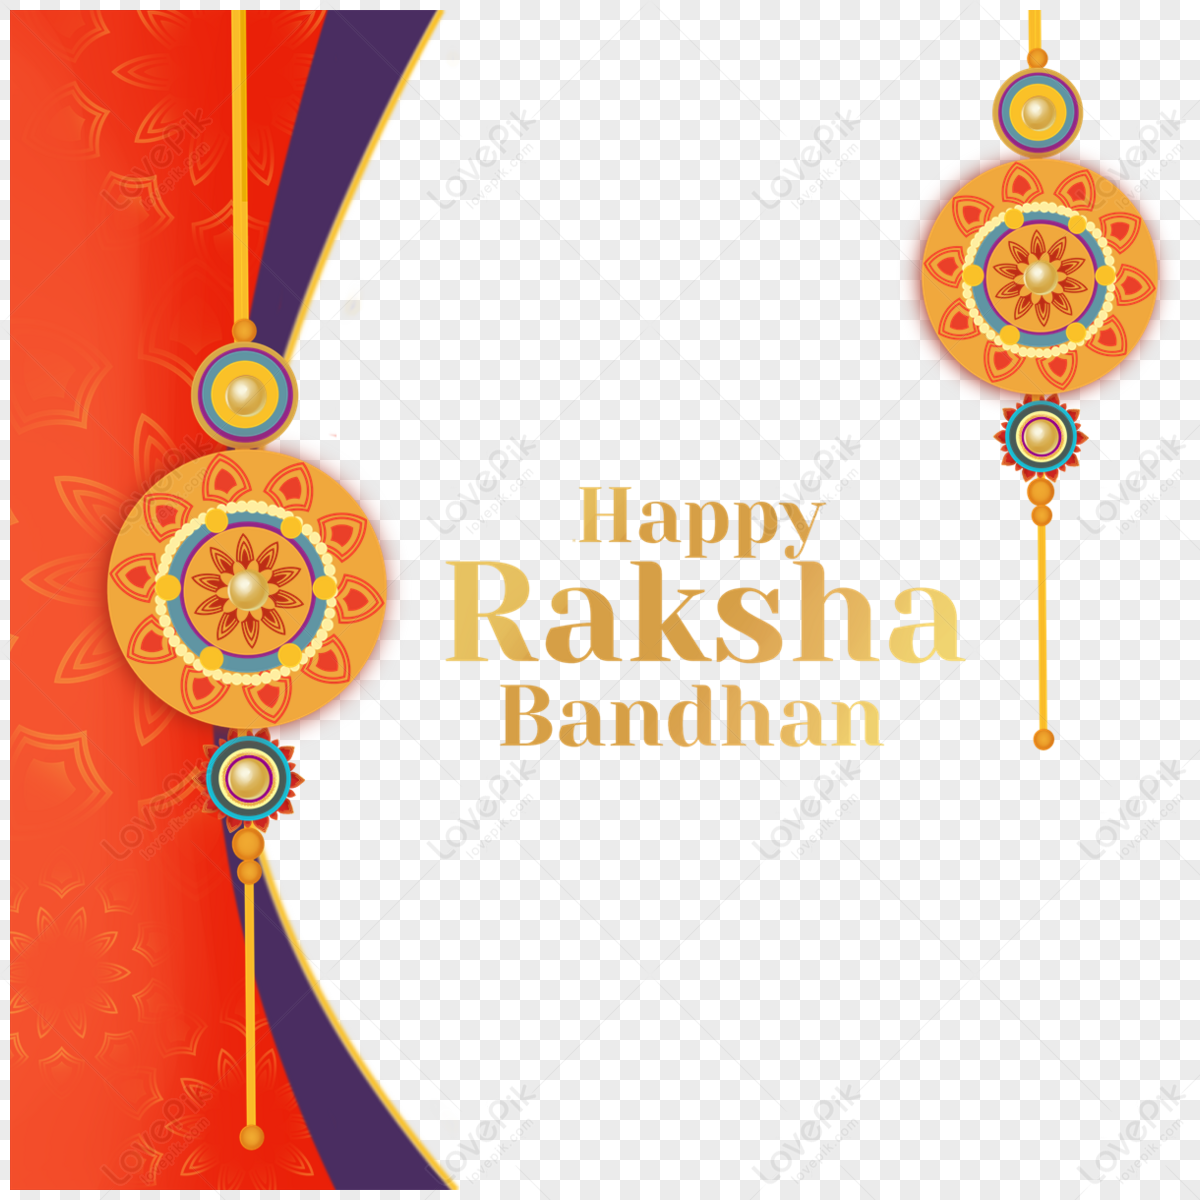 Raksha bandhan - Free cultures icons